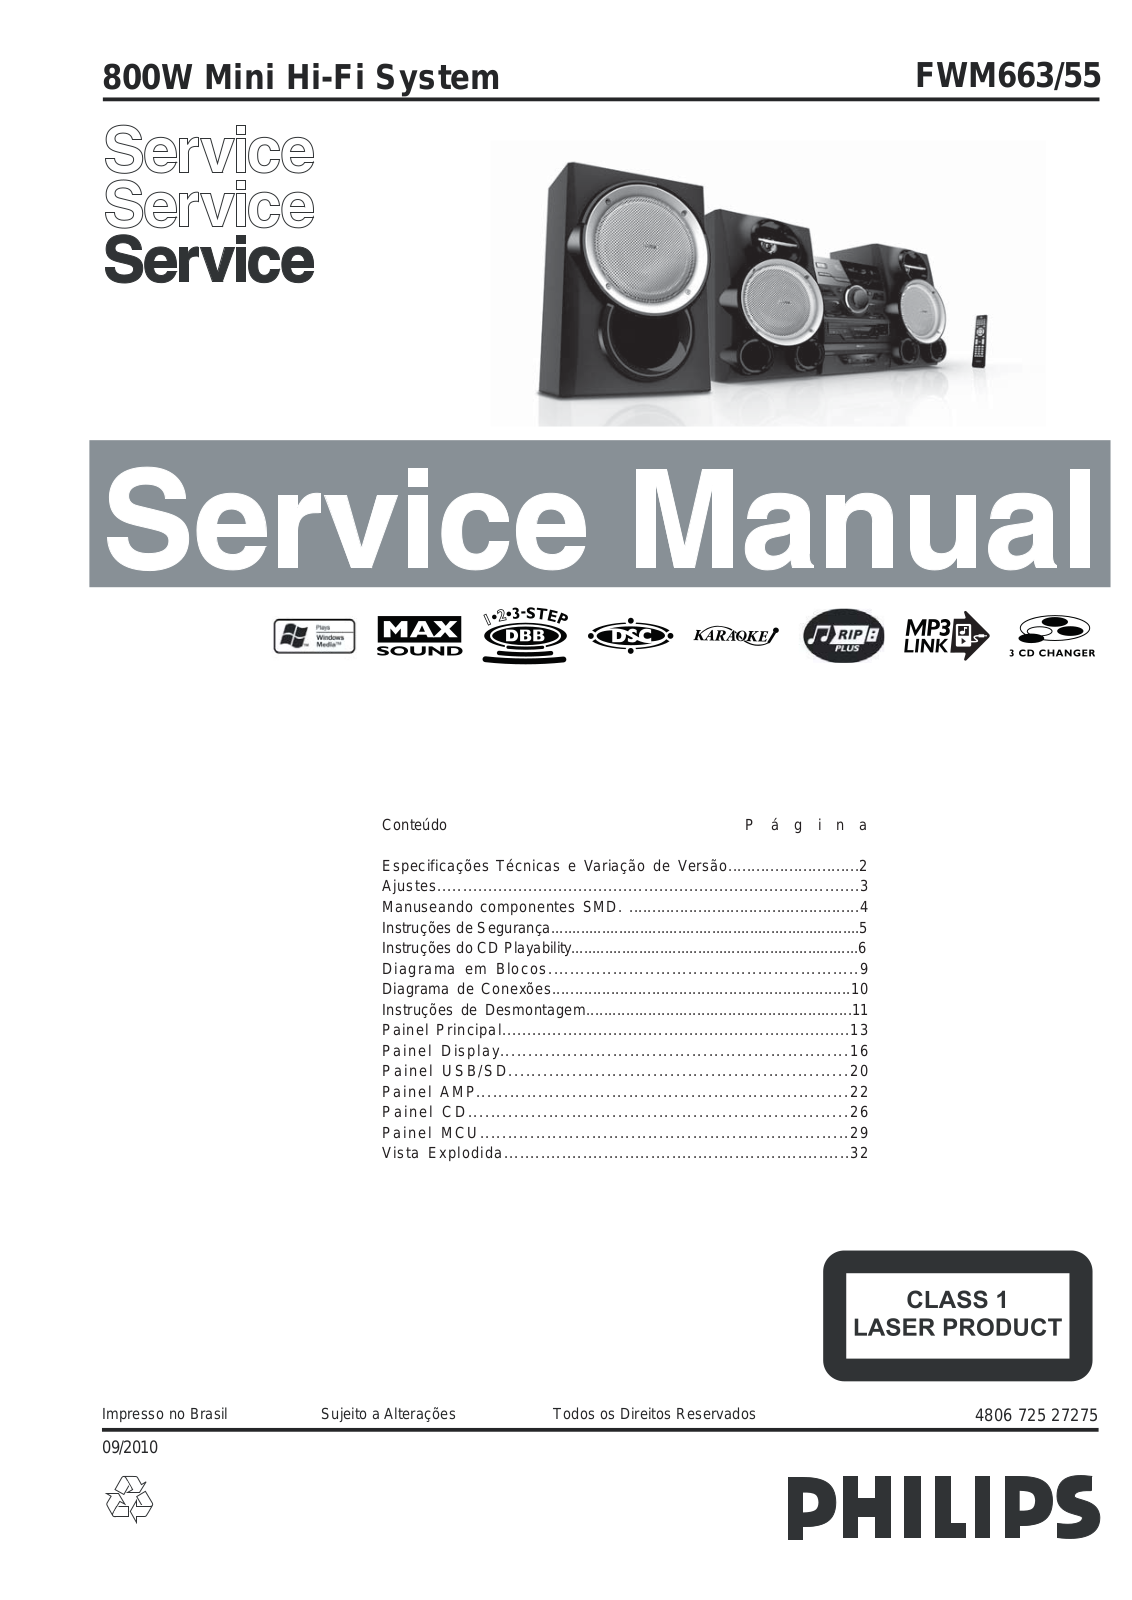 Philips FWM-663 Service Manual